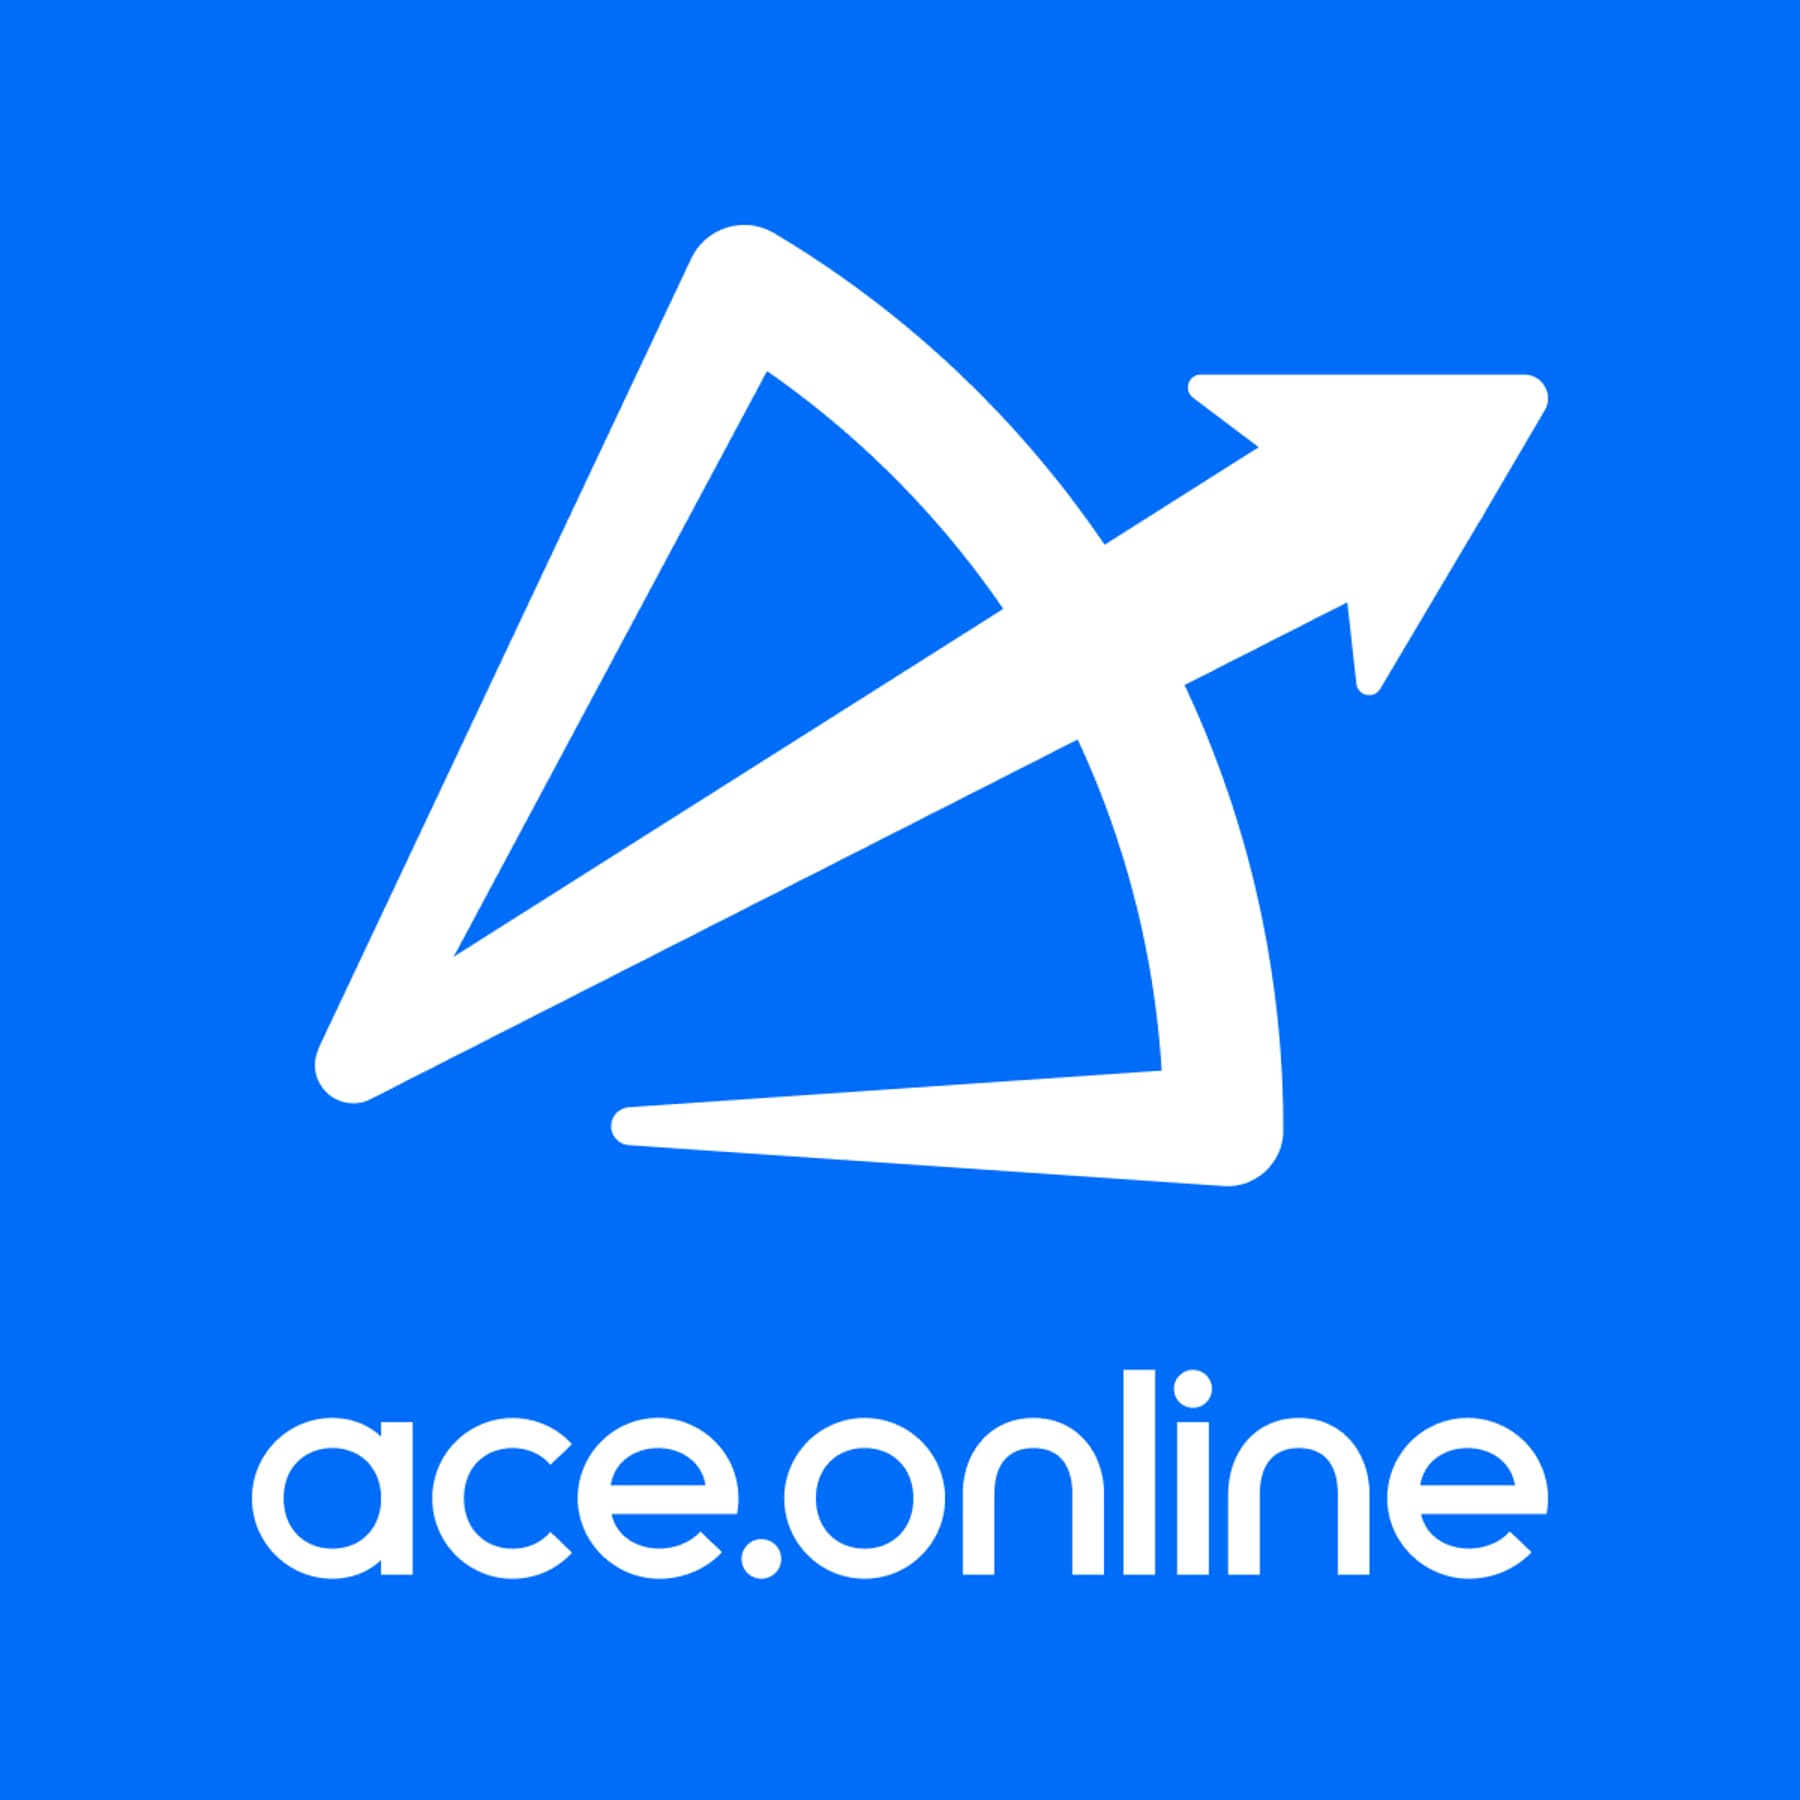 Ace Online's logo